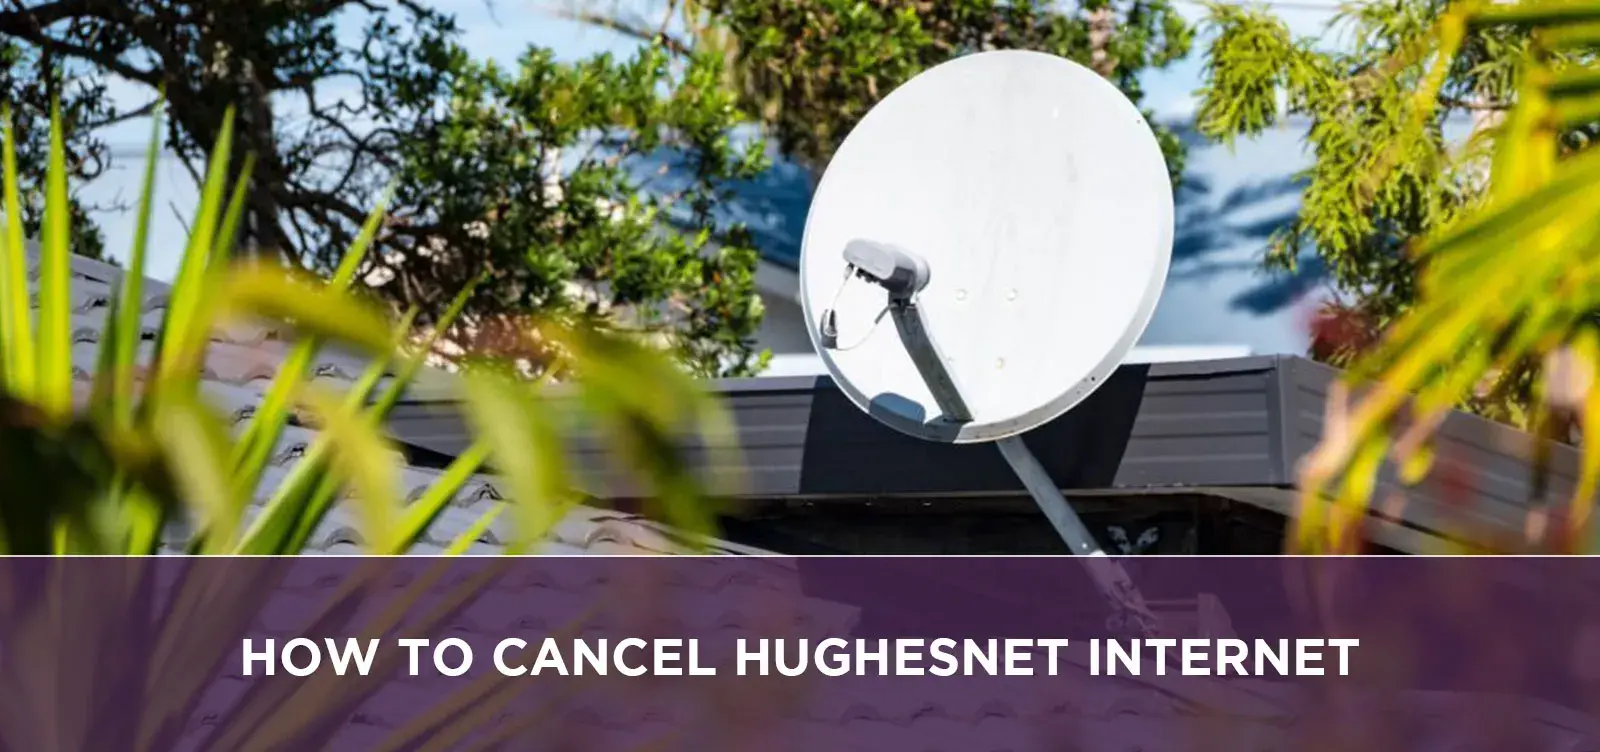 How To Cancel Hughesnet Internet?